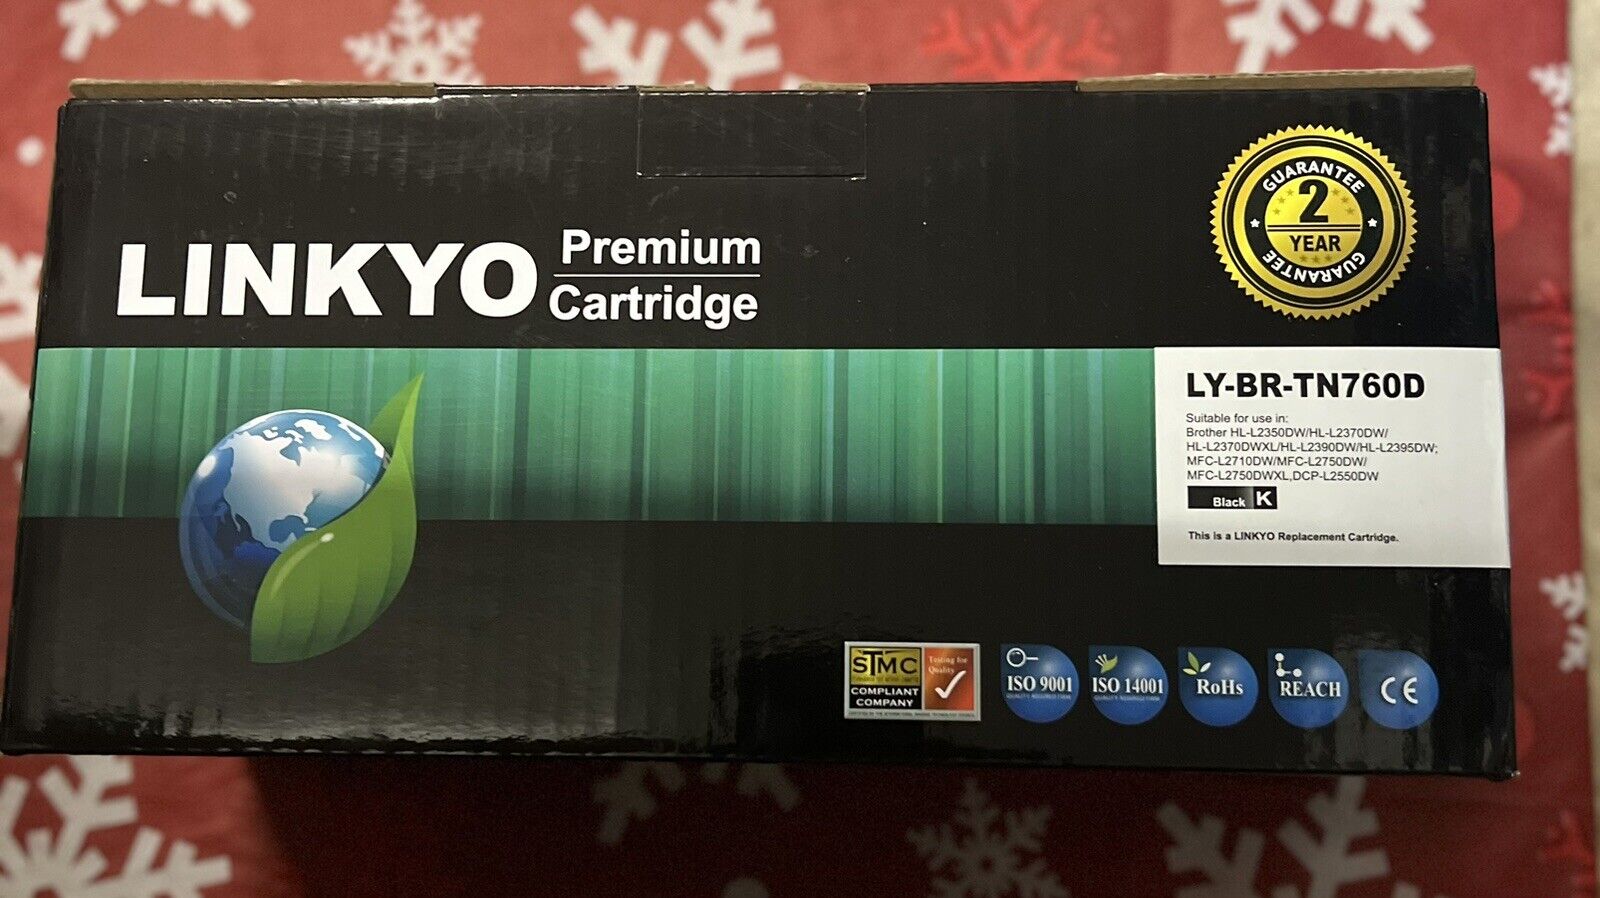 Lynkyo Premium Two Cartridges Pack ,LY-BR-TN760D BLACK Toner 2 cartridge new.